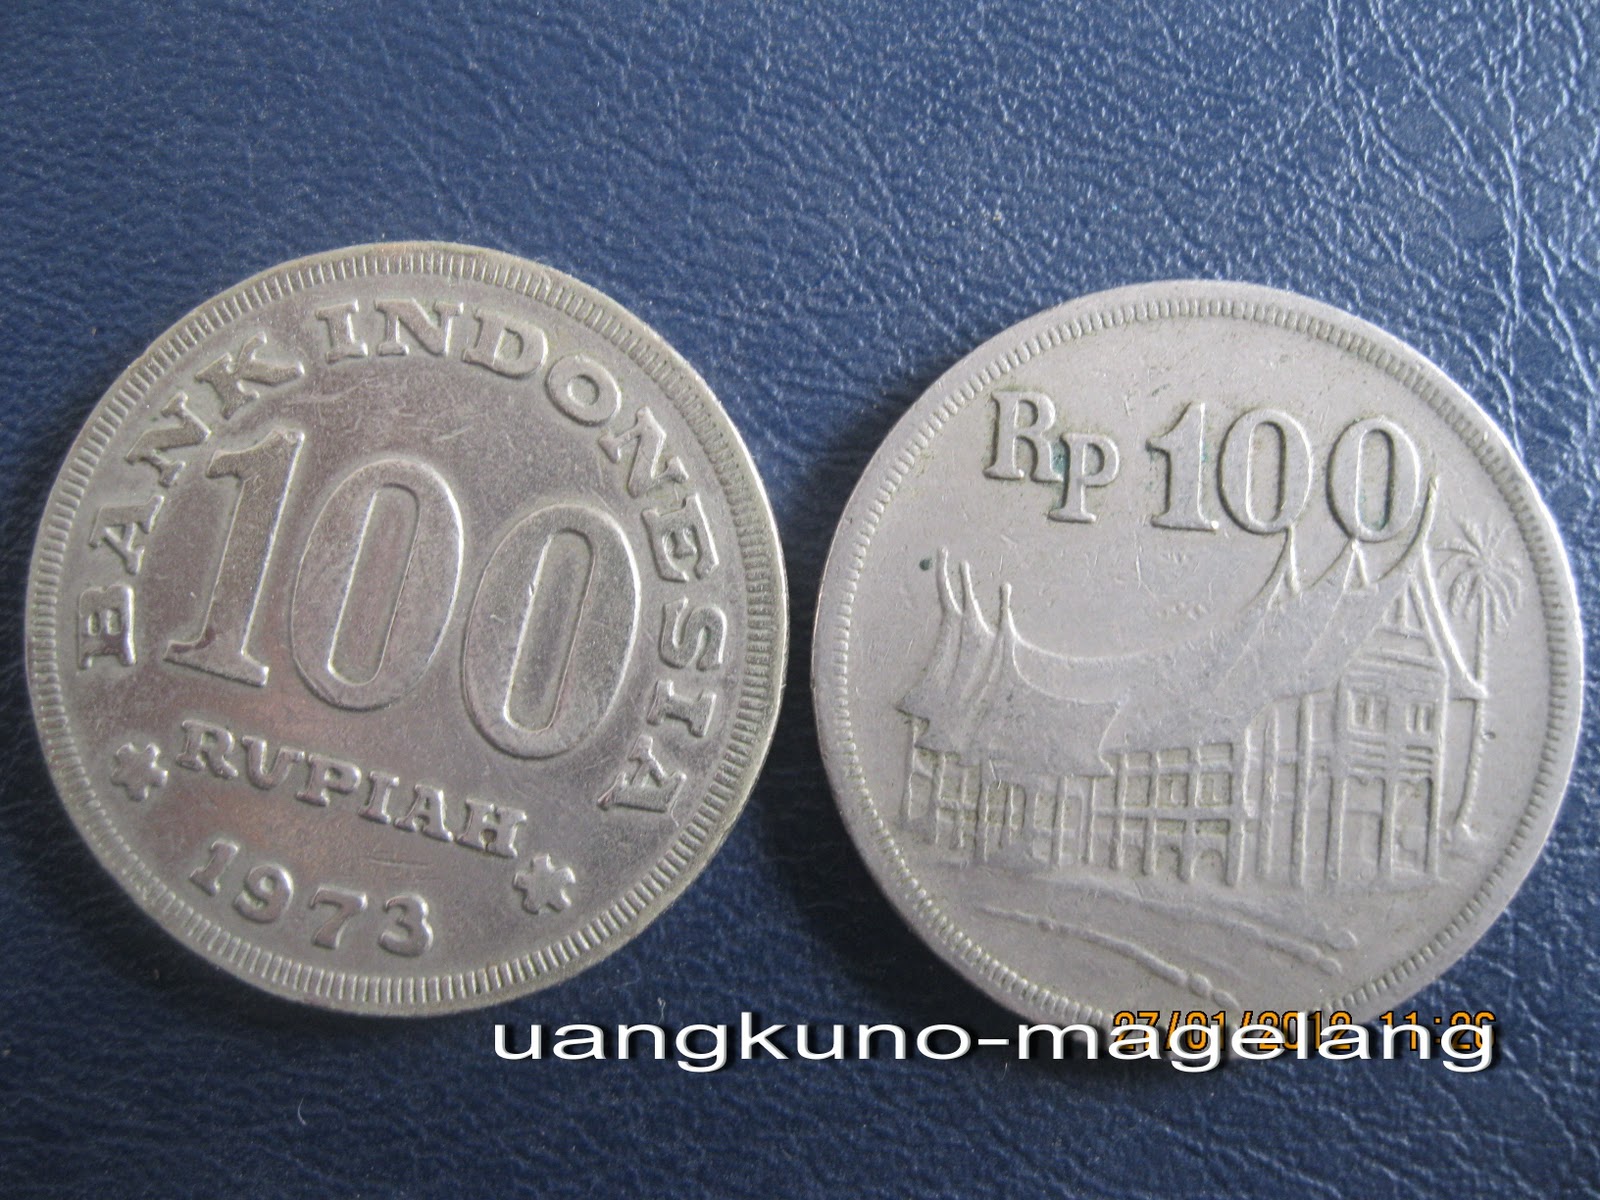 Uangkuno-magelang: 6. Uang Logam/Koin Indonesia